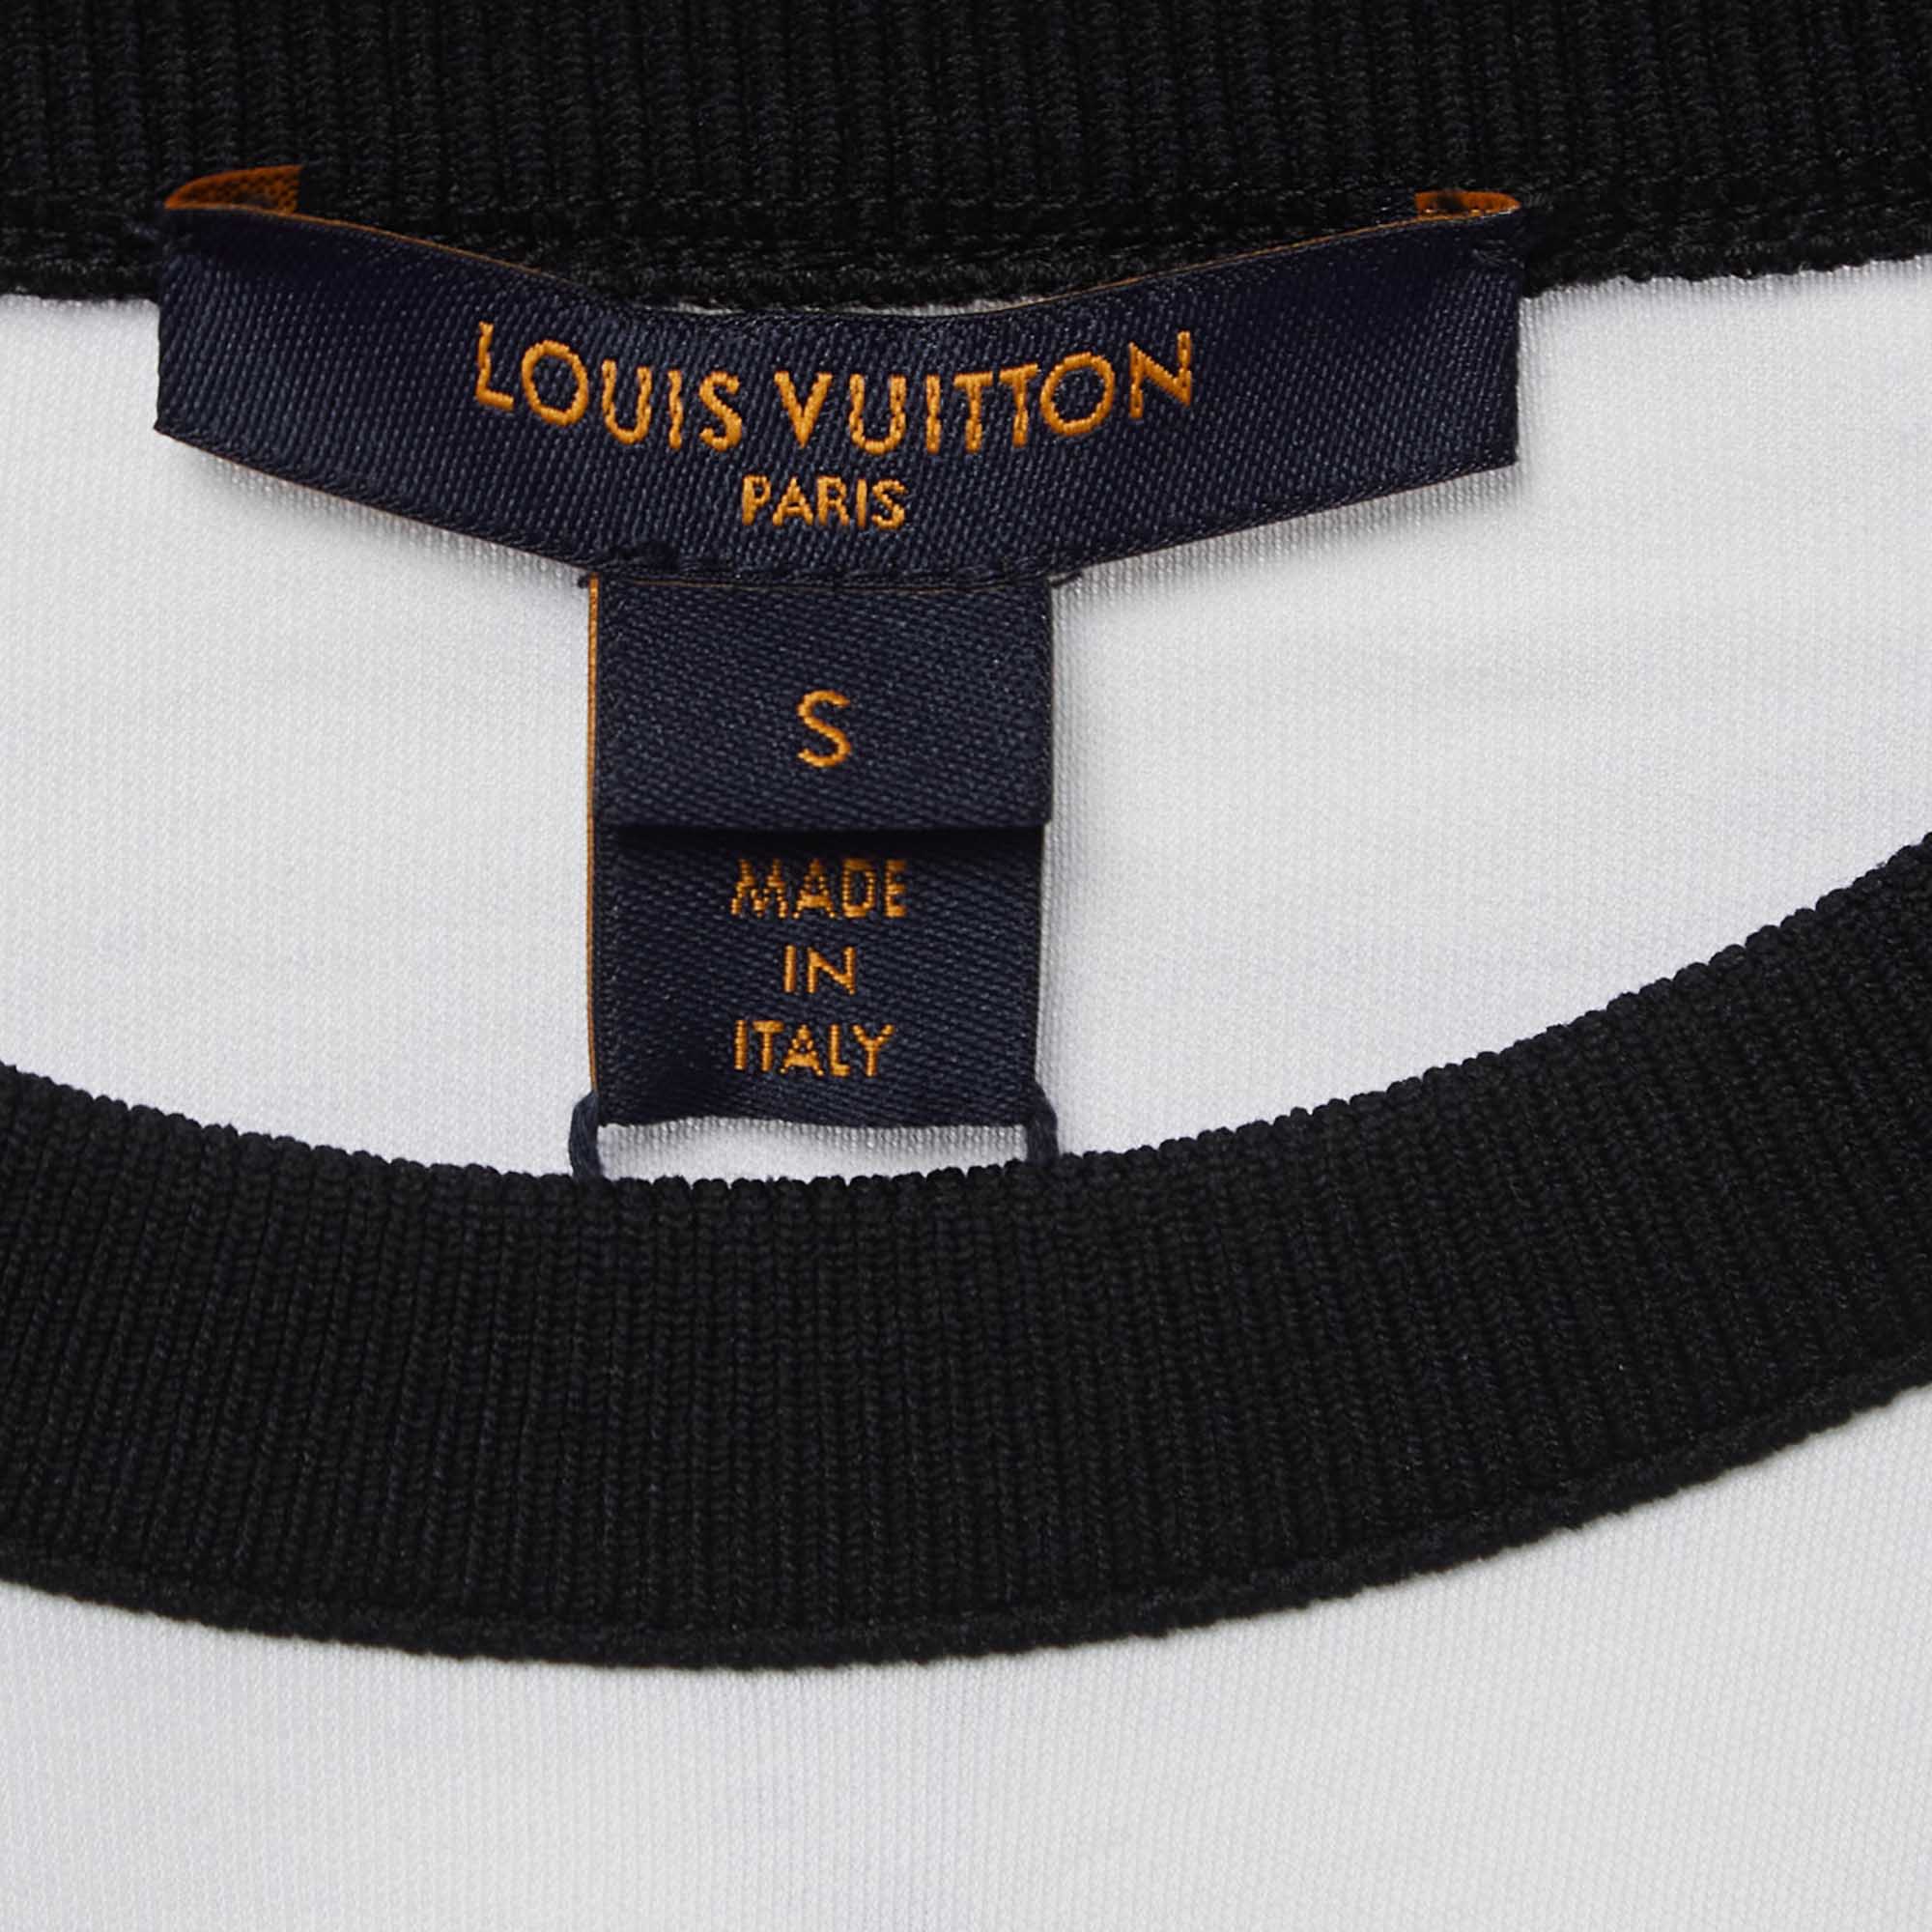 Louis Vuitton White Chain Print Cotton Mini T-Shirt Dress S